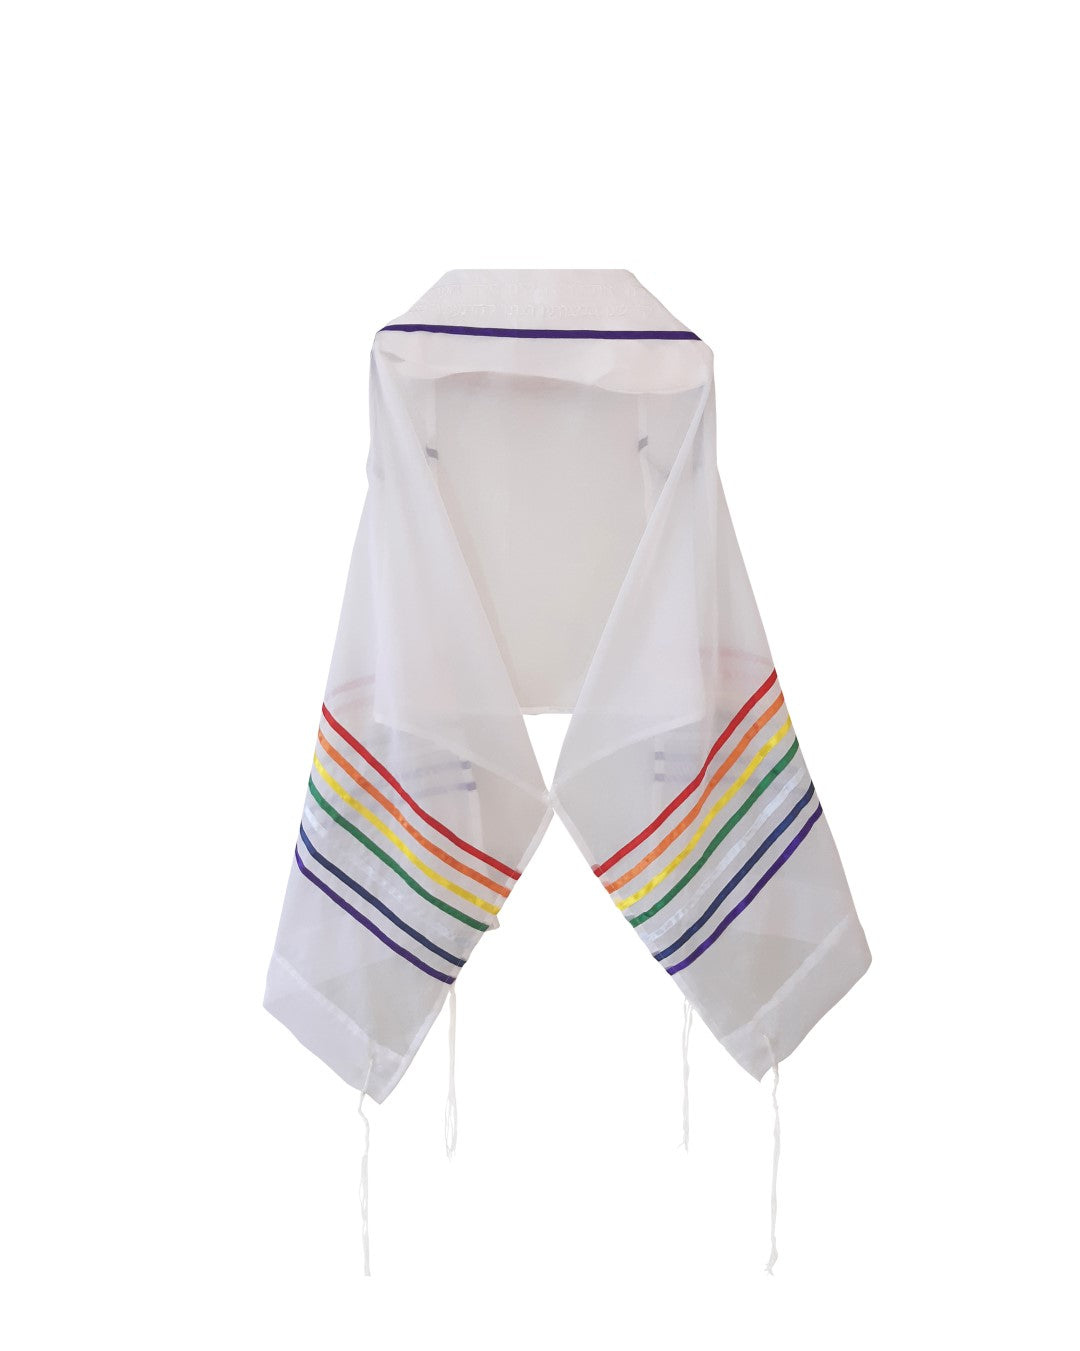 Handmade Sheer Rainbow Tallit, Joseph's Coat of Many Colors Tallis, Bat Mitzvah Tallit back, Talit for Woman, Tzitzit